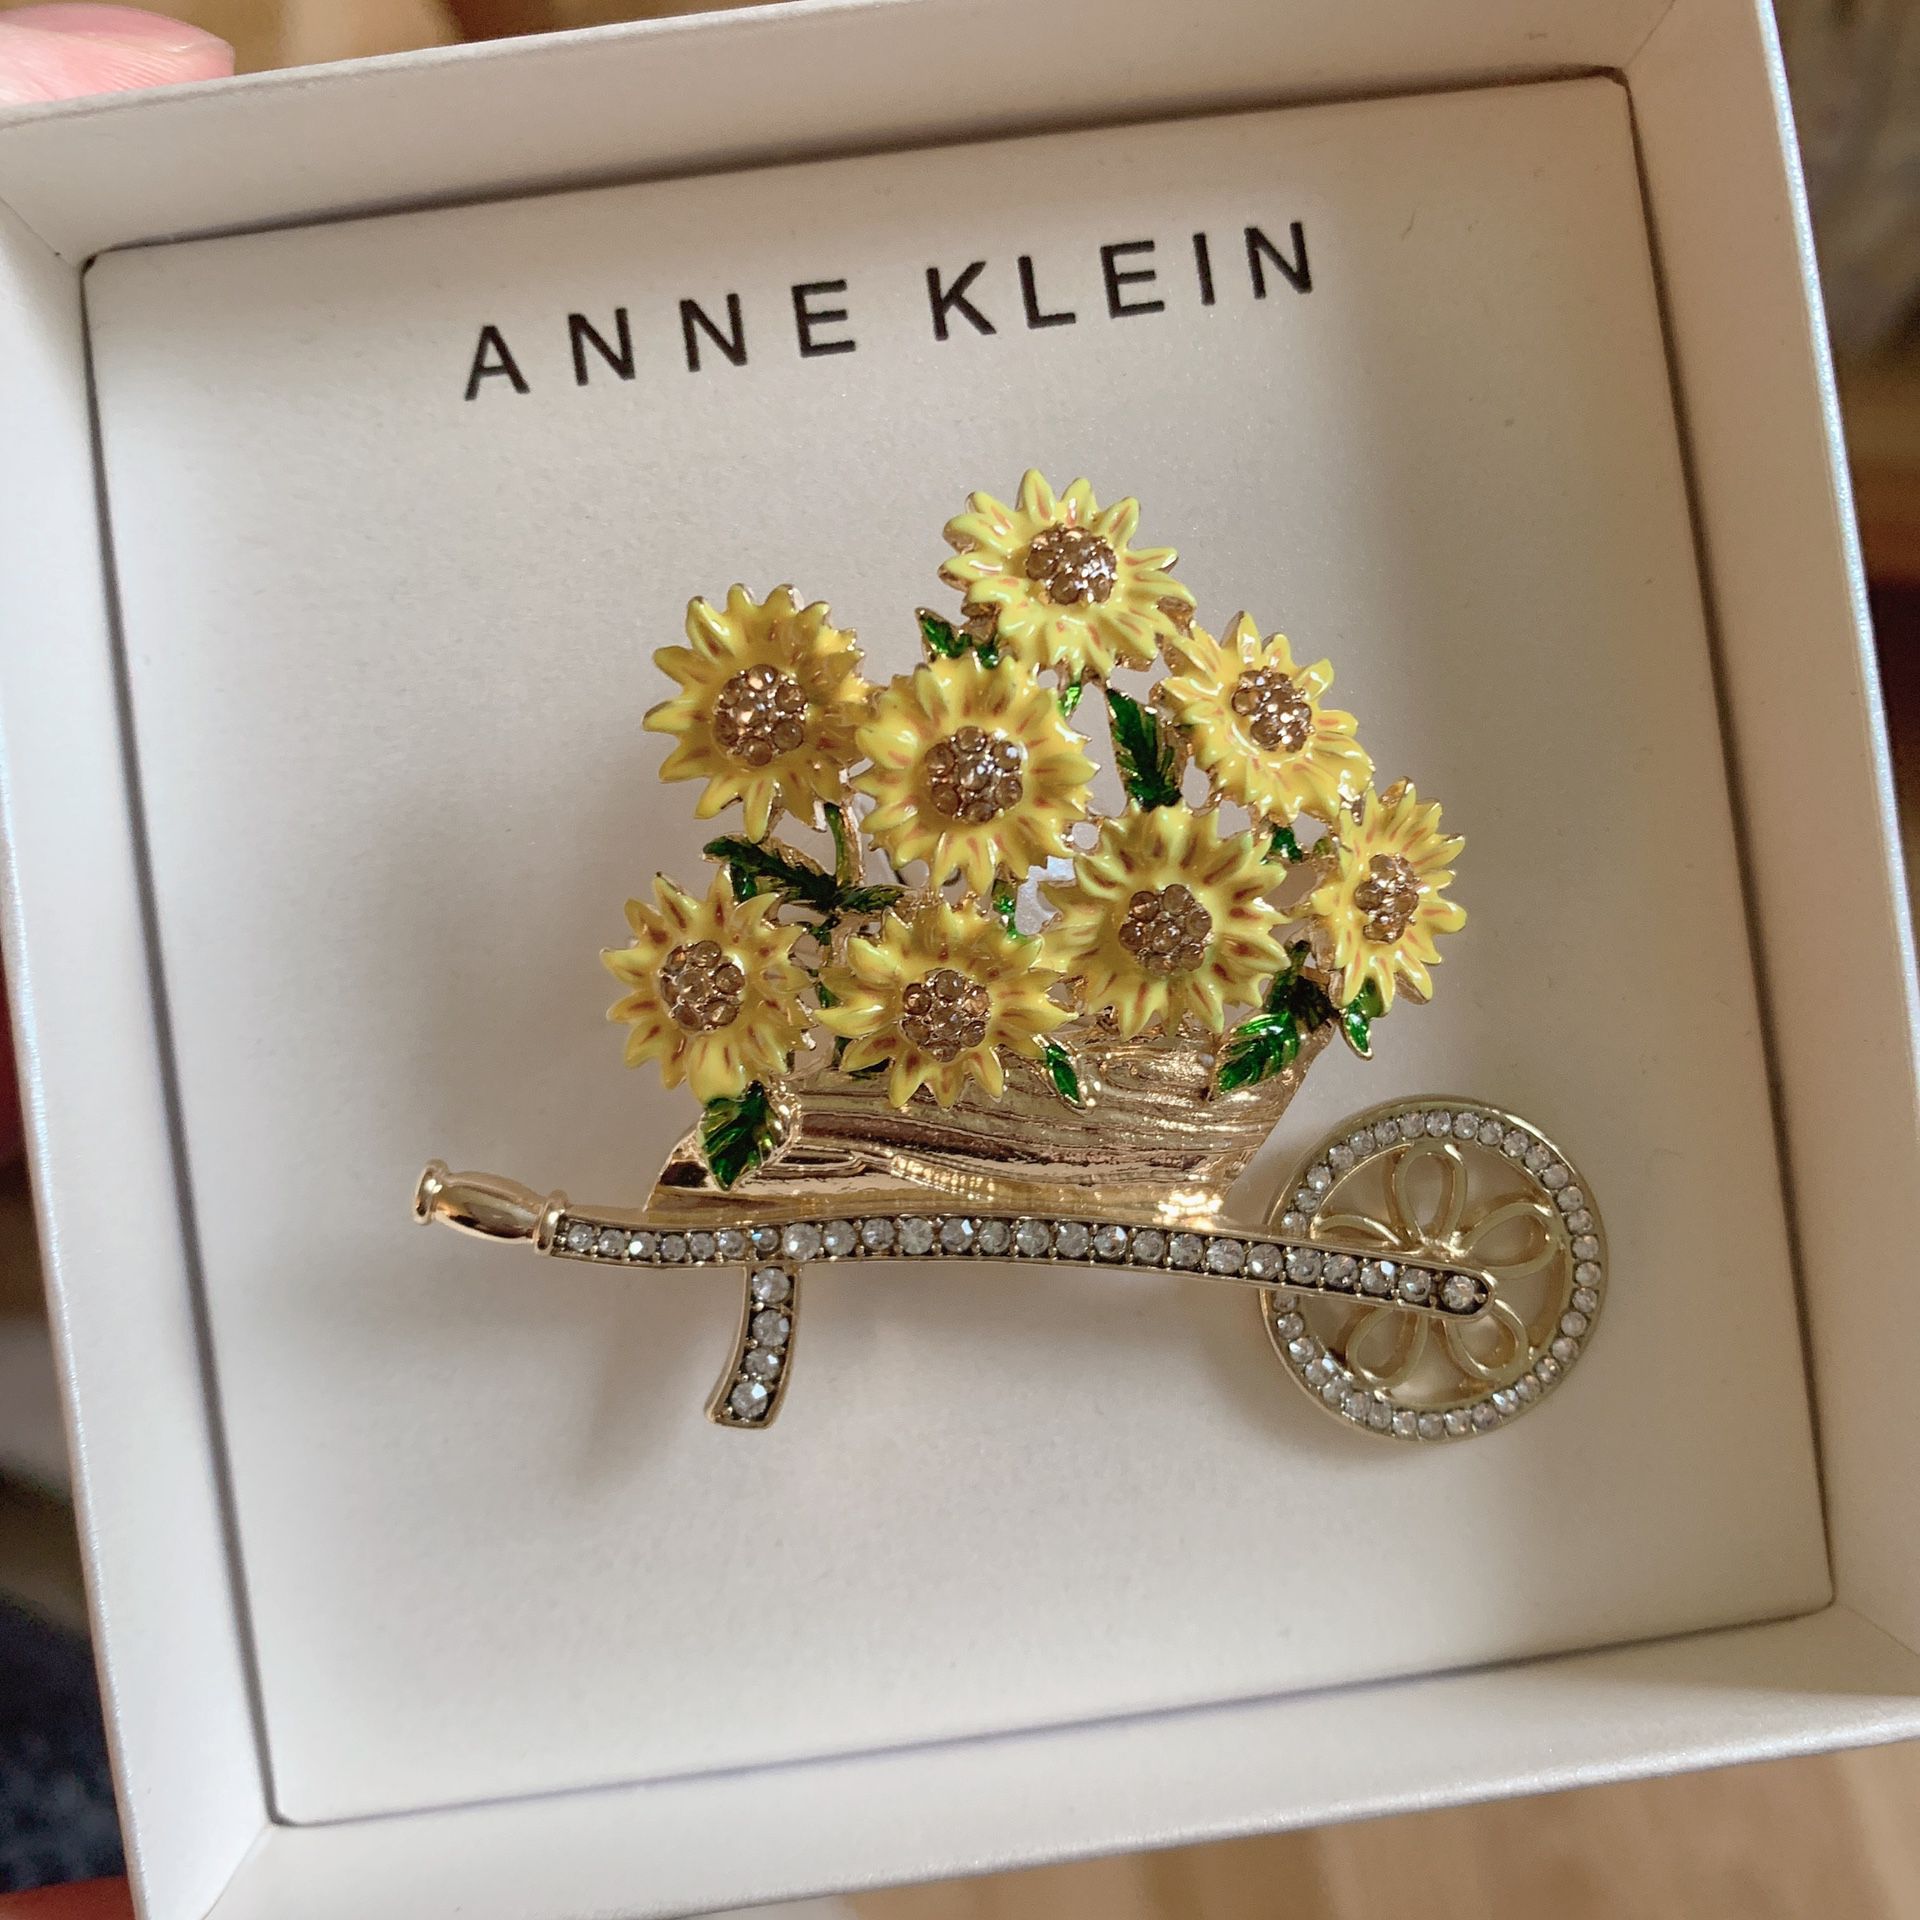 NWT Anne Klein Sunflower Cart Brooch Pin Gift Box 59220